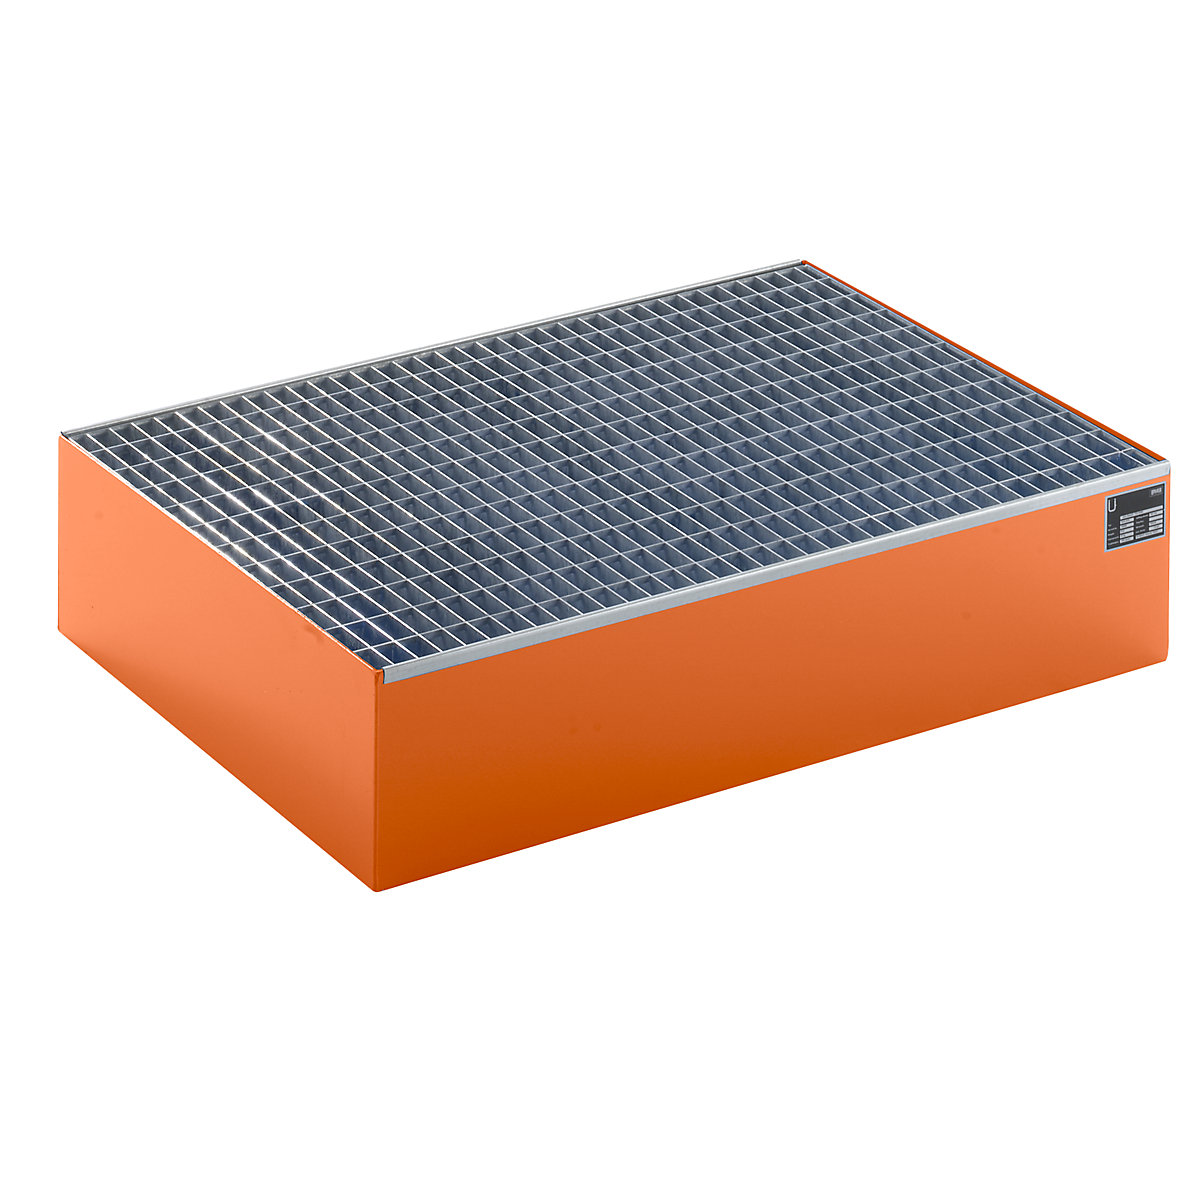 EUROKRAFTbasic – Pallet sump tray, LxWxH 1200 x 800 x 260 mm, orange RAL 2000, with grate